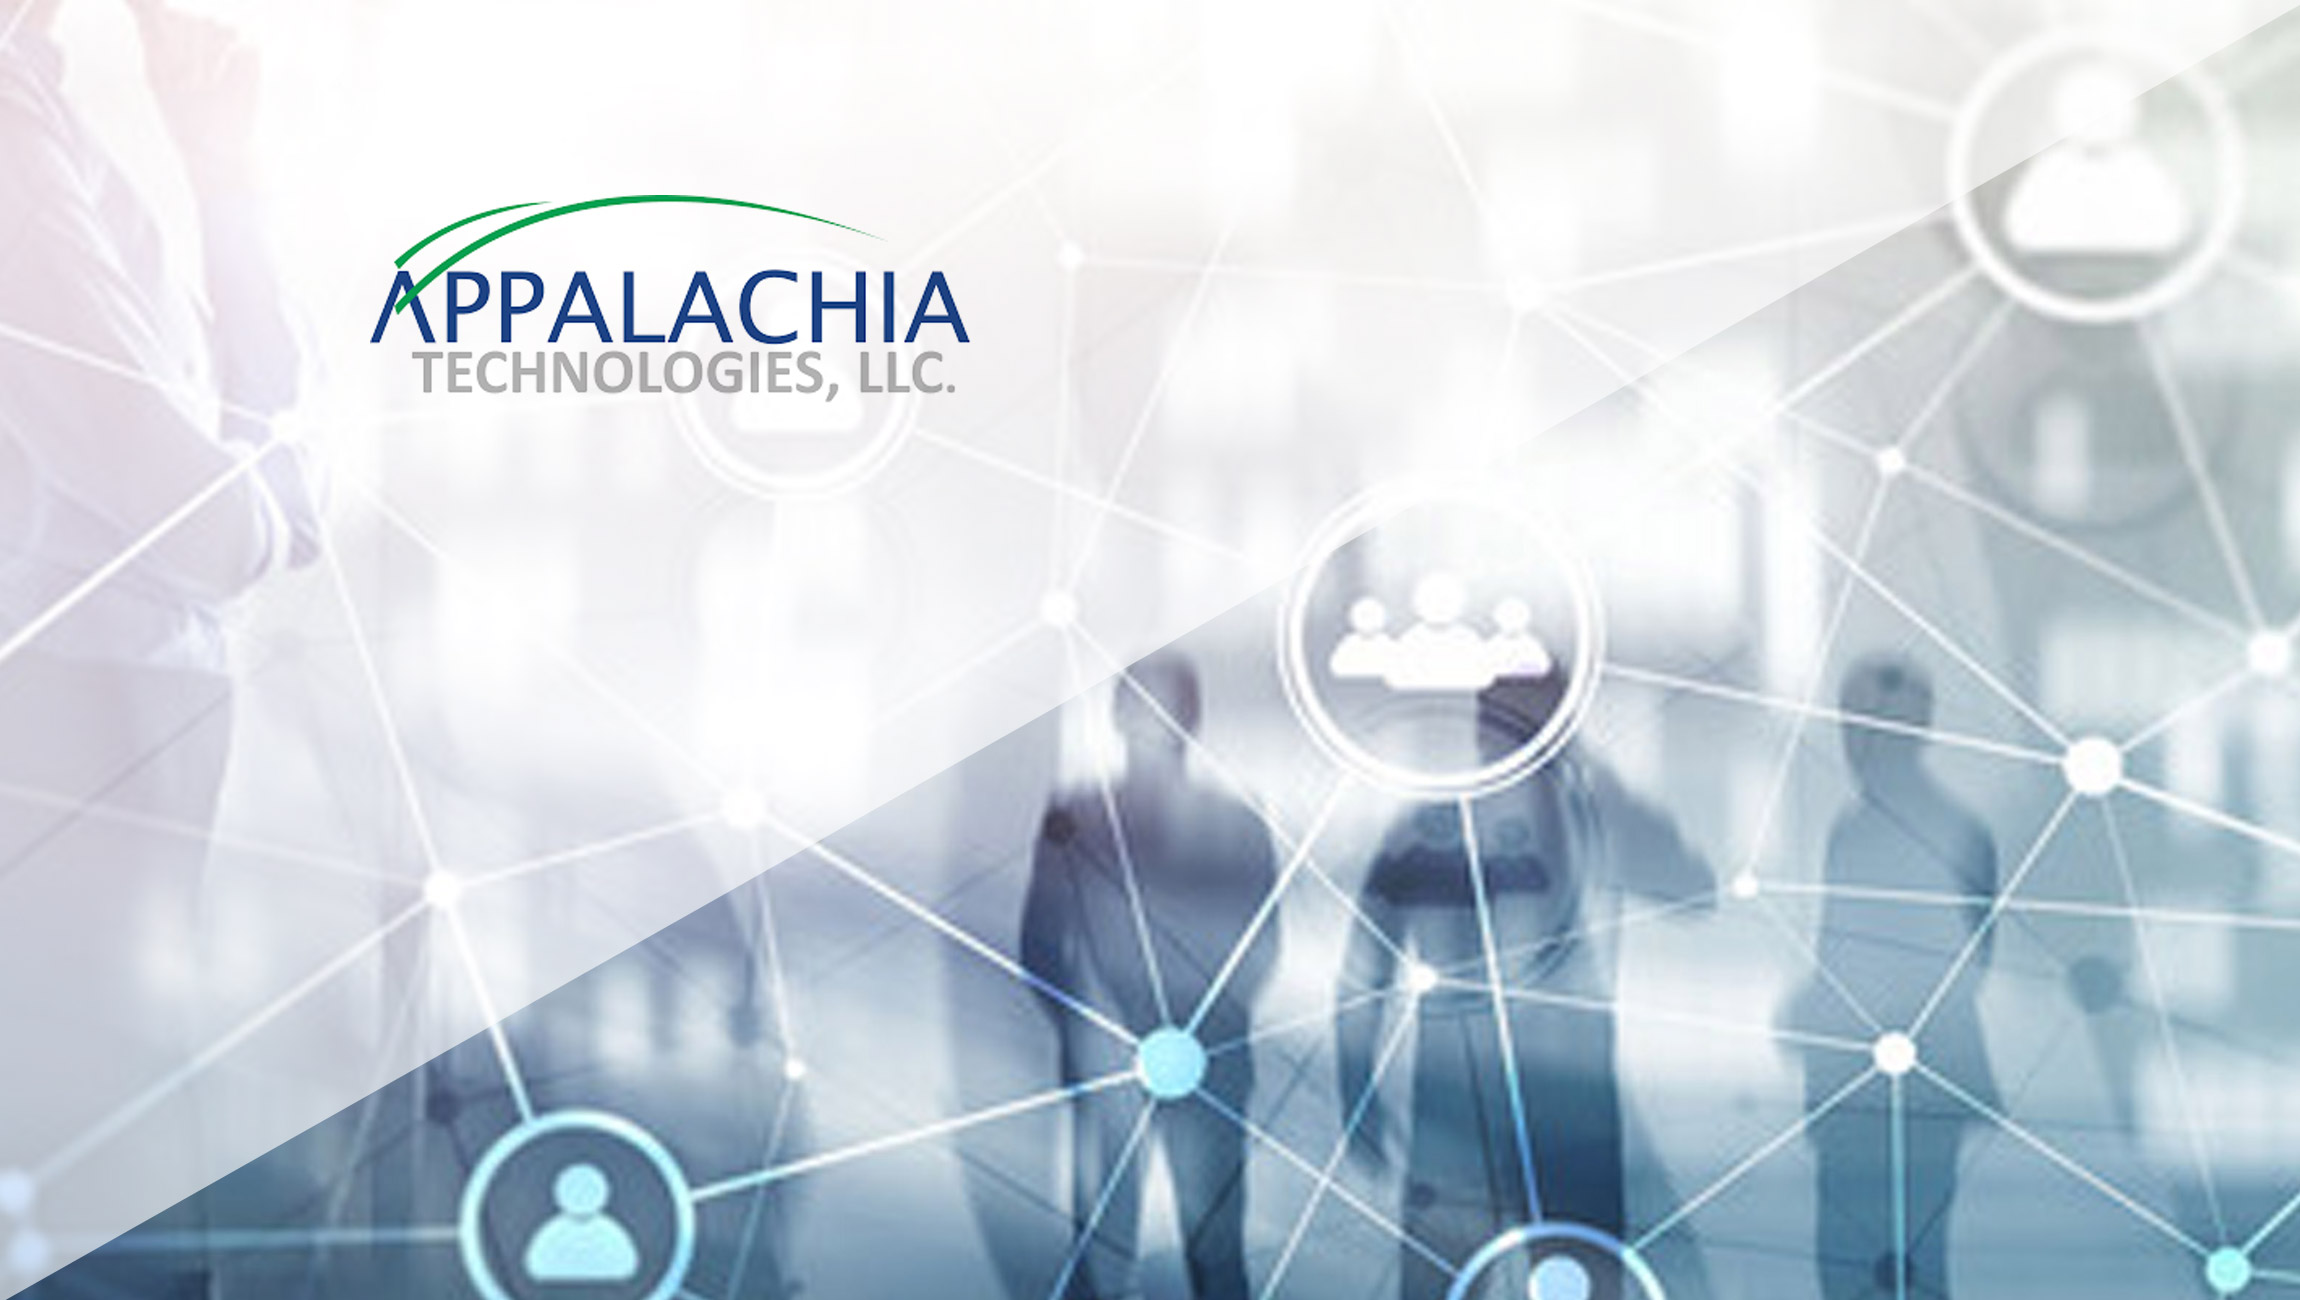 Appalachia Technologies Promotes a President, Vice President